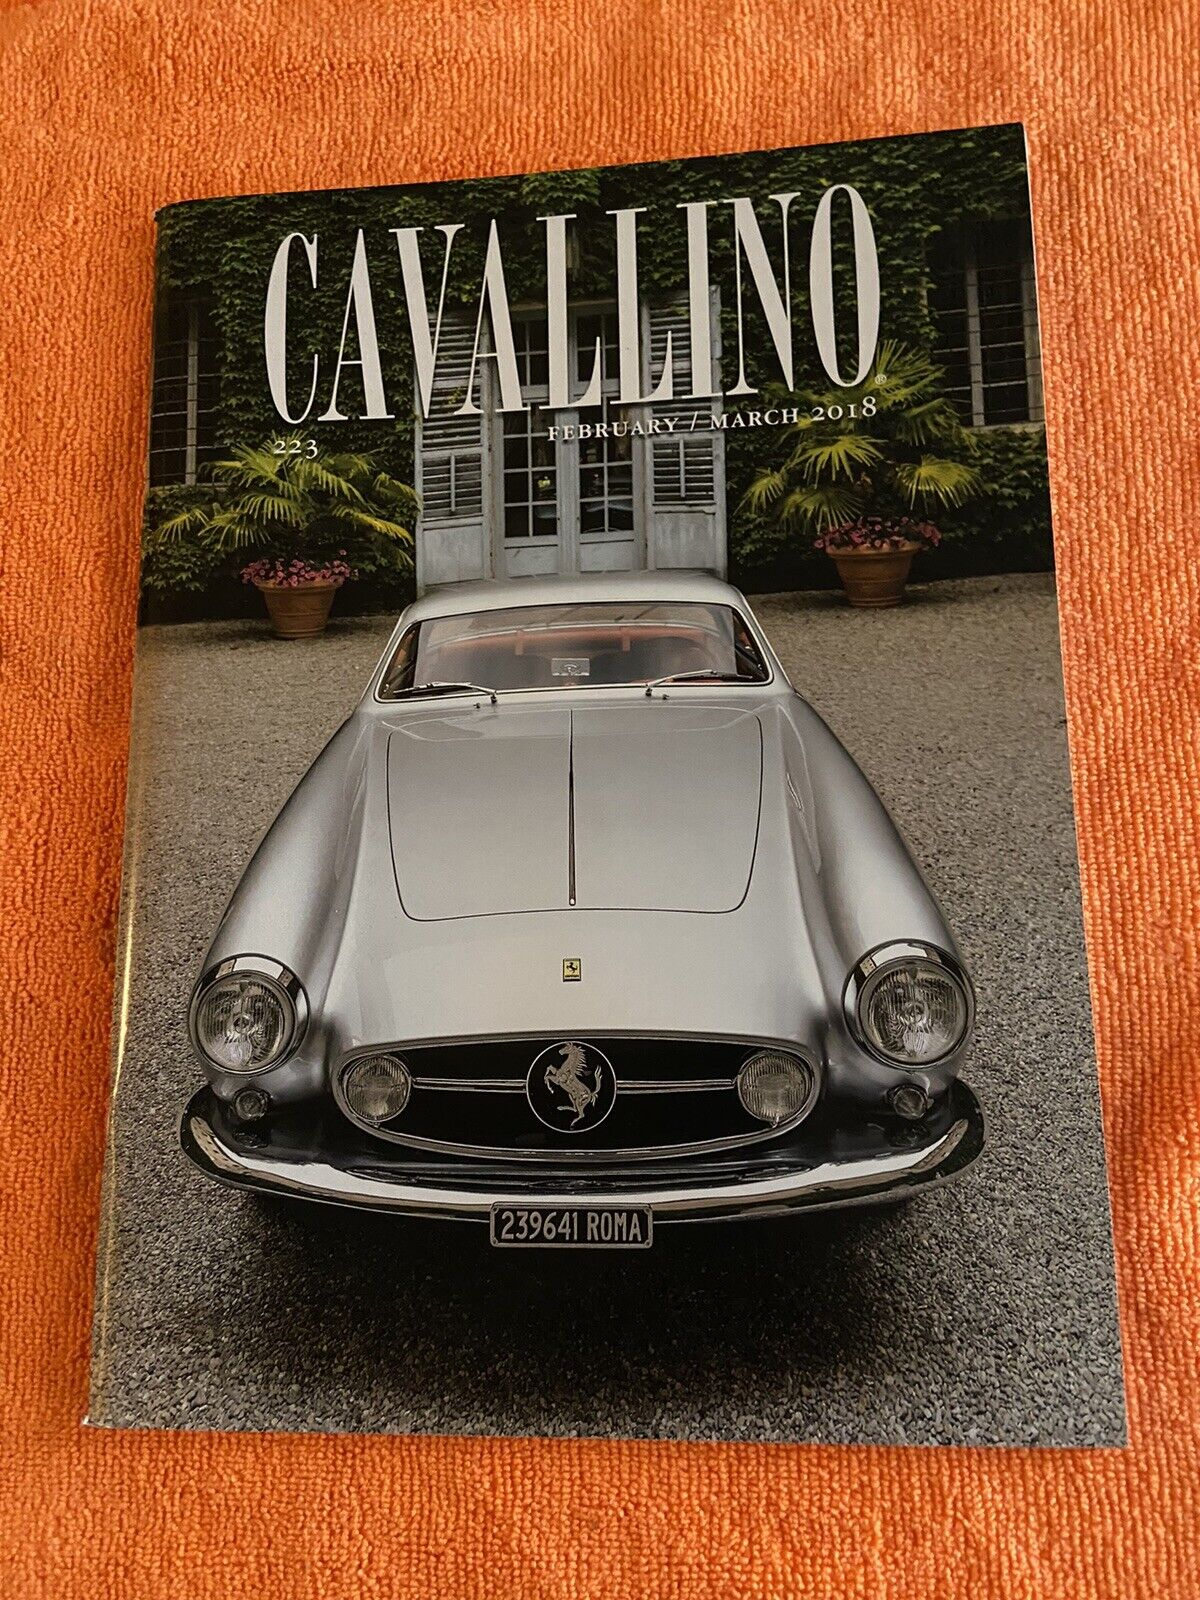 Cavallino Magazine #223, February / March 2018 - Ferrari Nice Crisp Piece